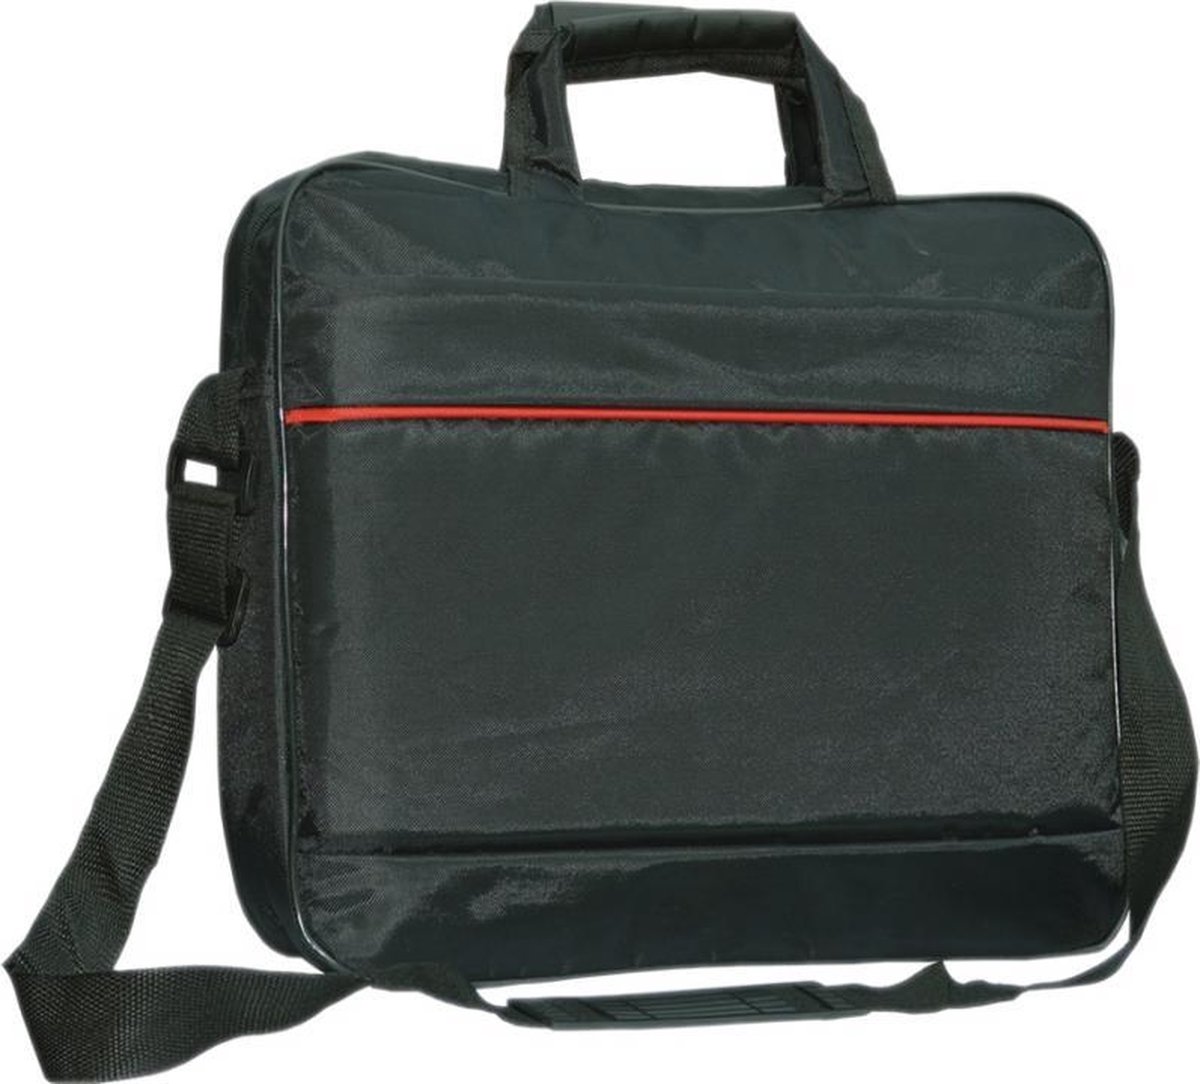 Dell Xps 13 Ultrabook laptoptas messenger bag / schoudertas / tas , zwart , merk i12Cover